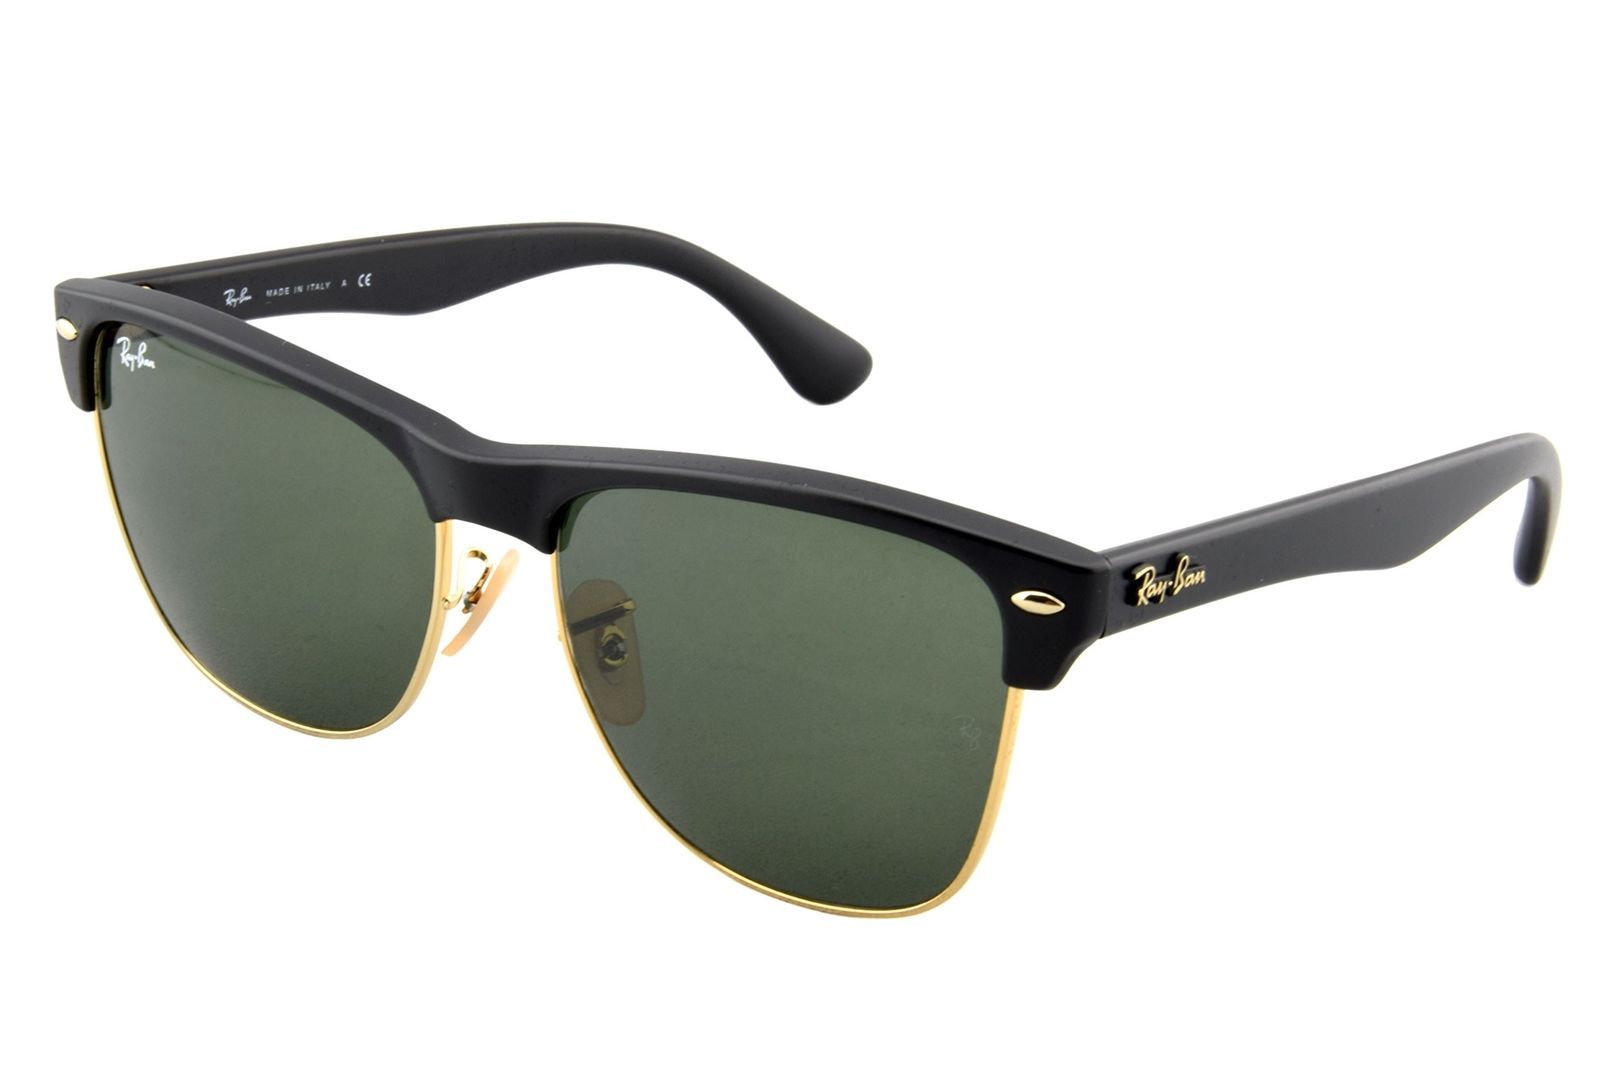 Ray-Ban 0RB4175 Square Sunglasses Demi Shiny Black/Arista 57 mm - $198.98